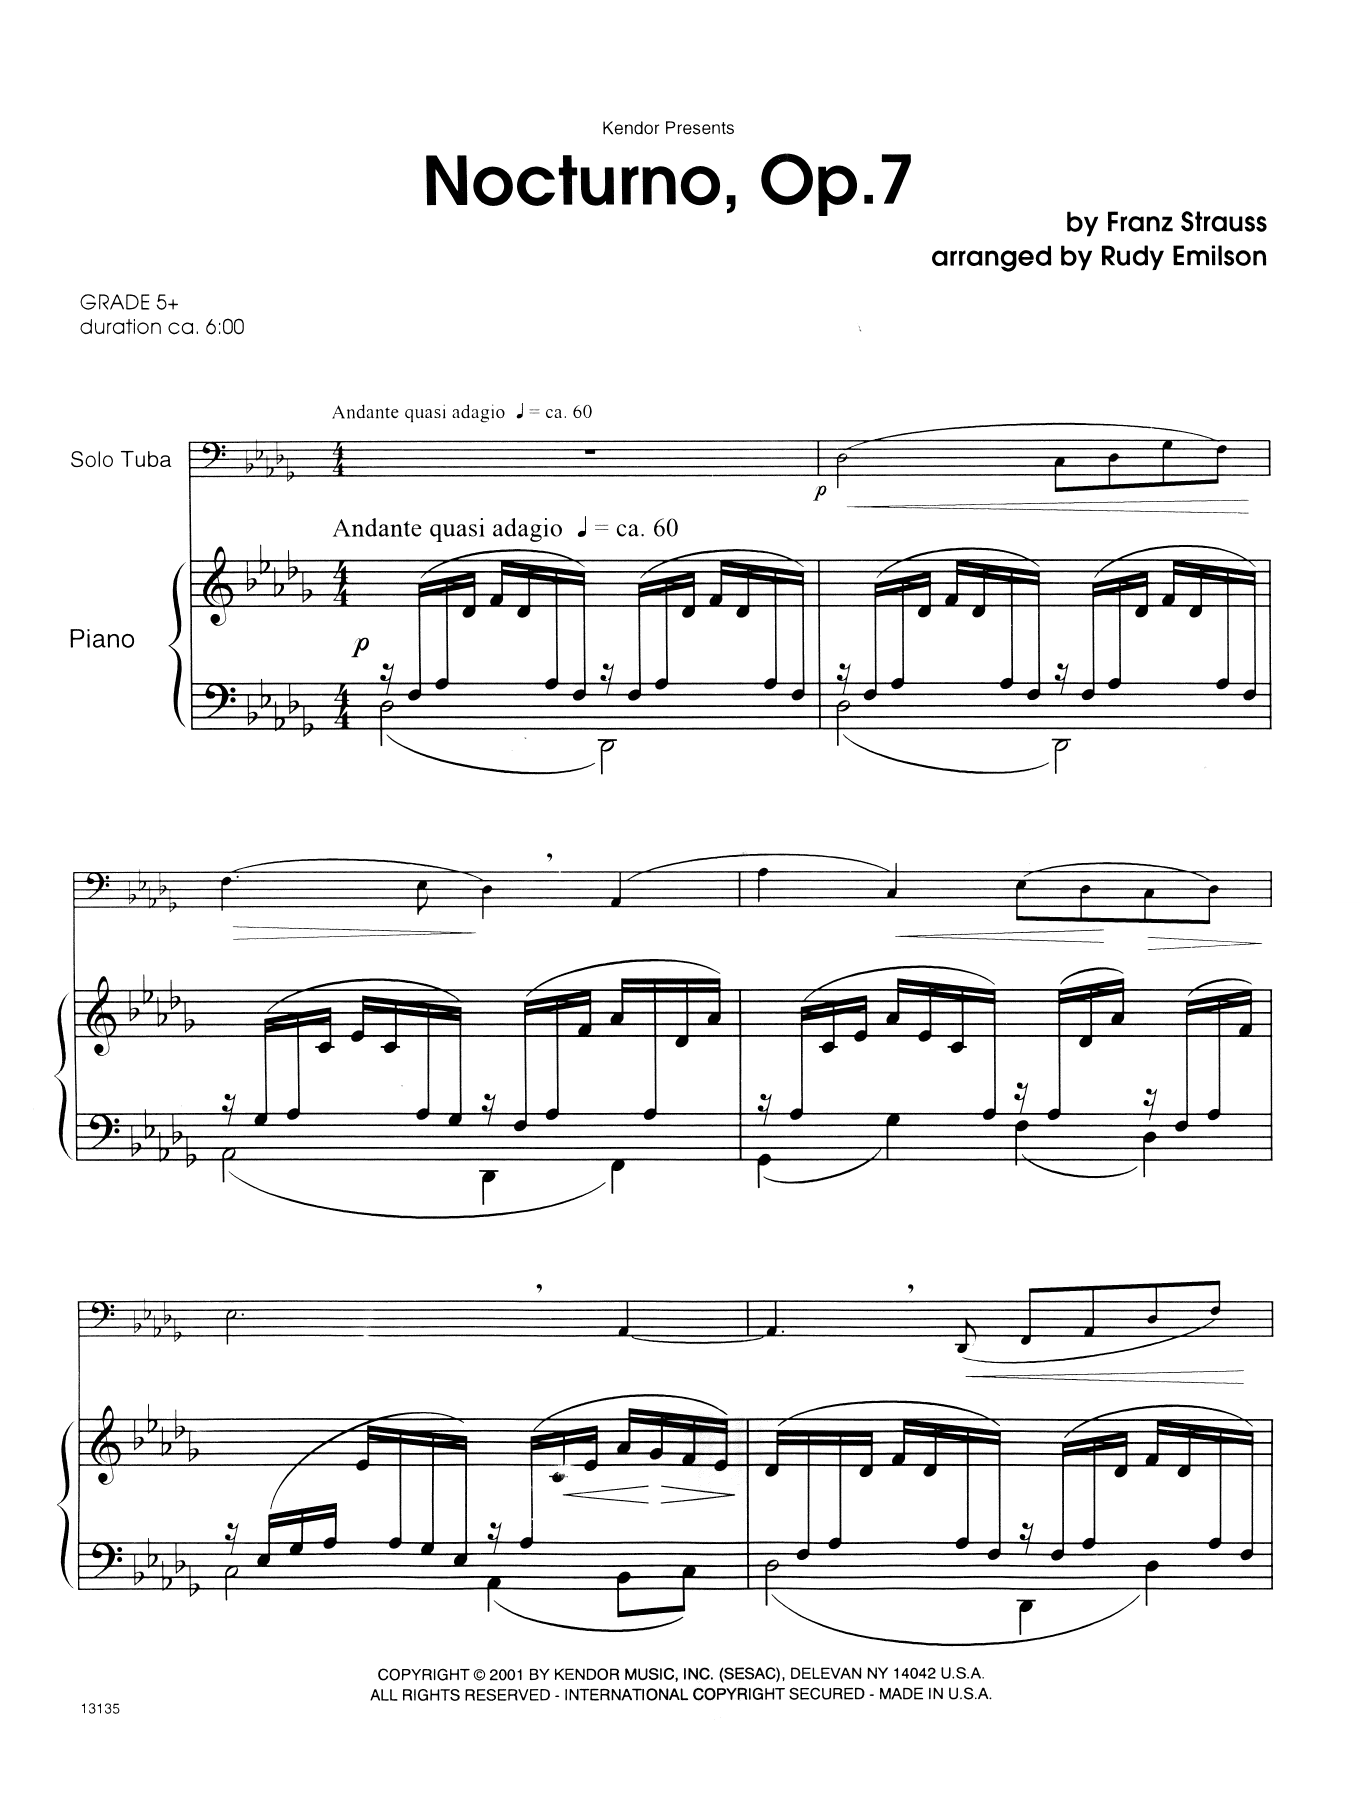 Download Rudy Emilson Nocturno, Op. 7 - Piano Accompaniment Sheet Music